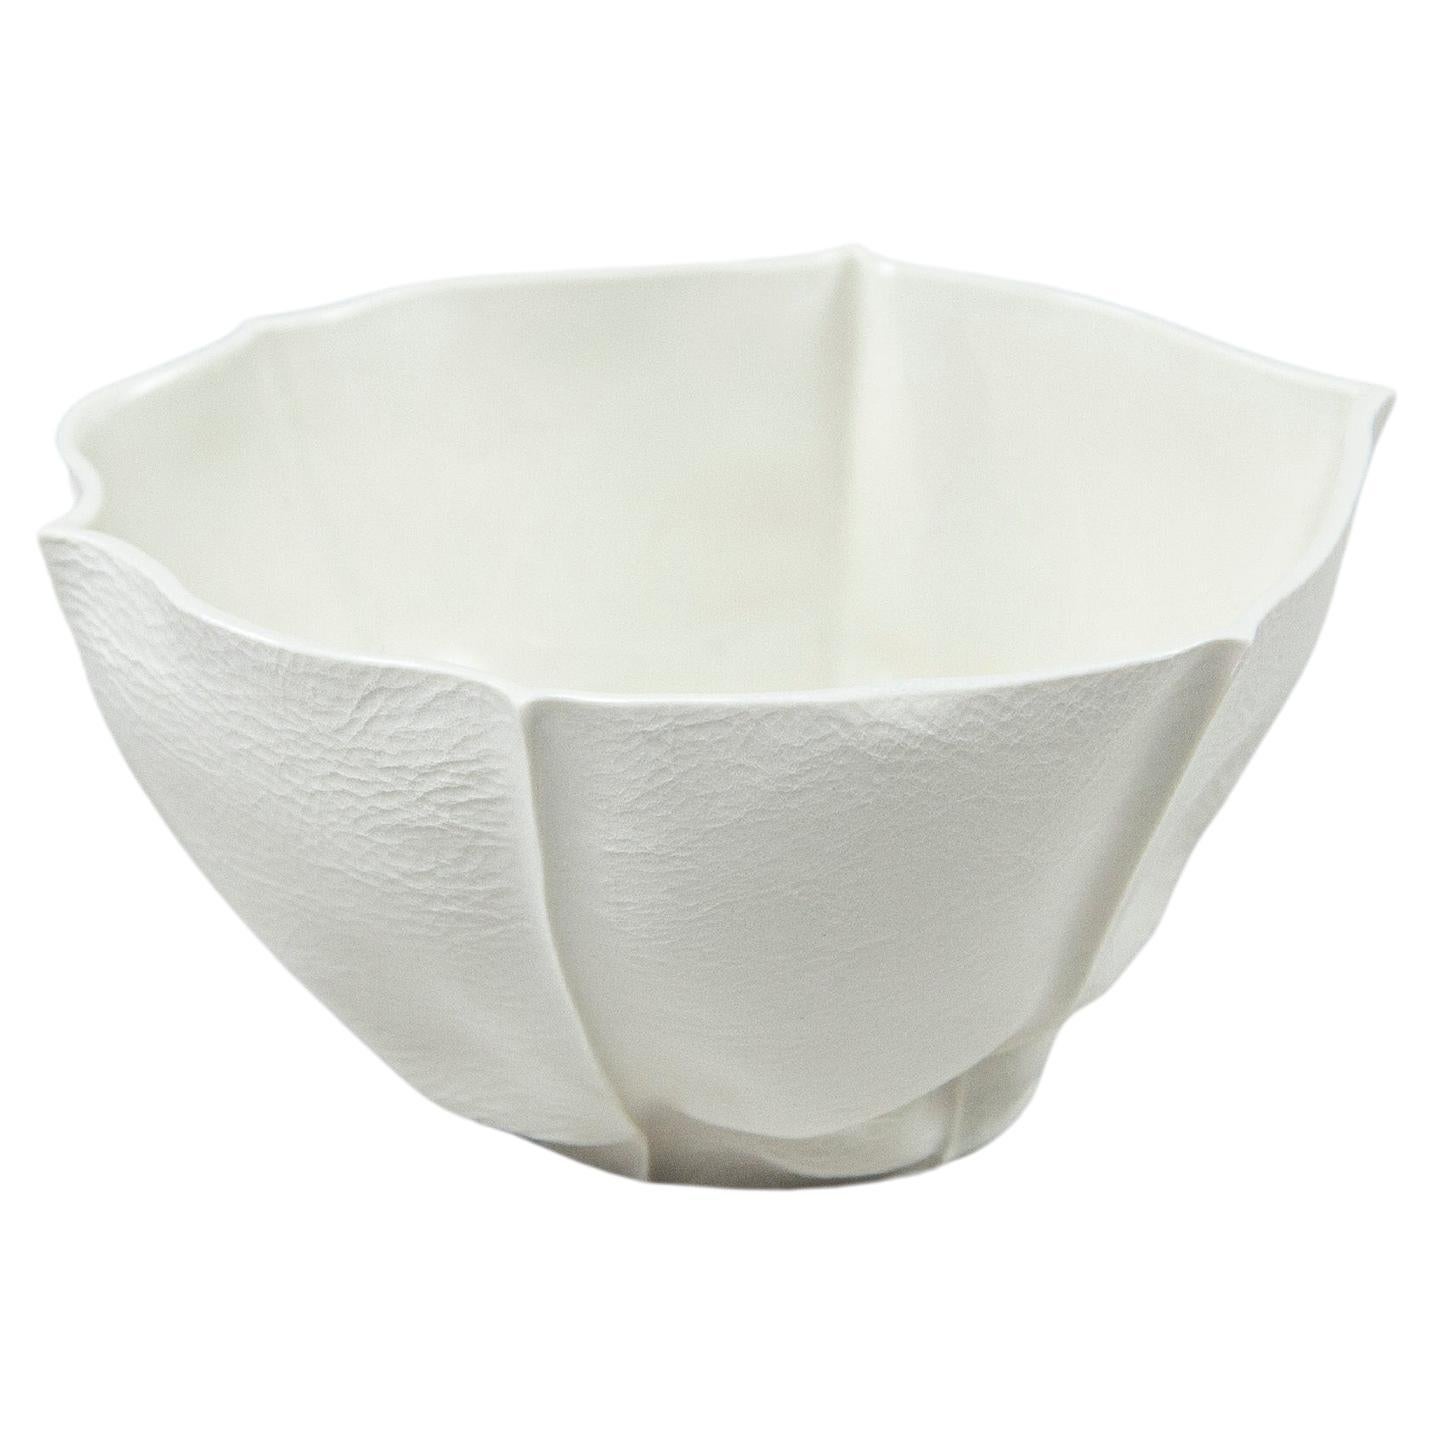 In-stock, White Porcelain Kawa Bowl, Leather Cast Ceramic Vessel, organic form